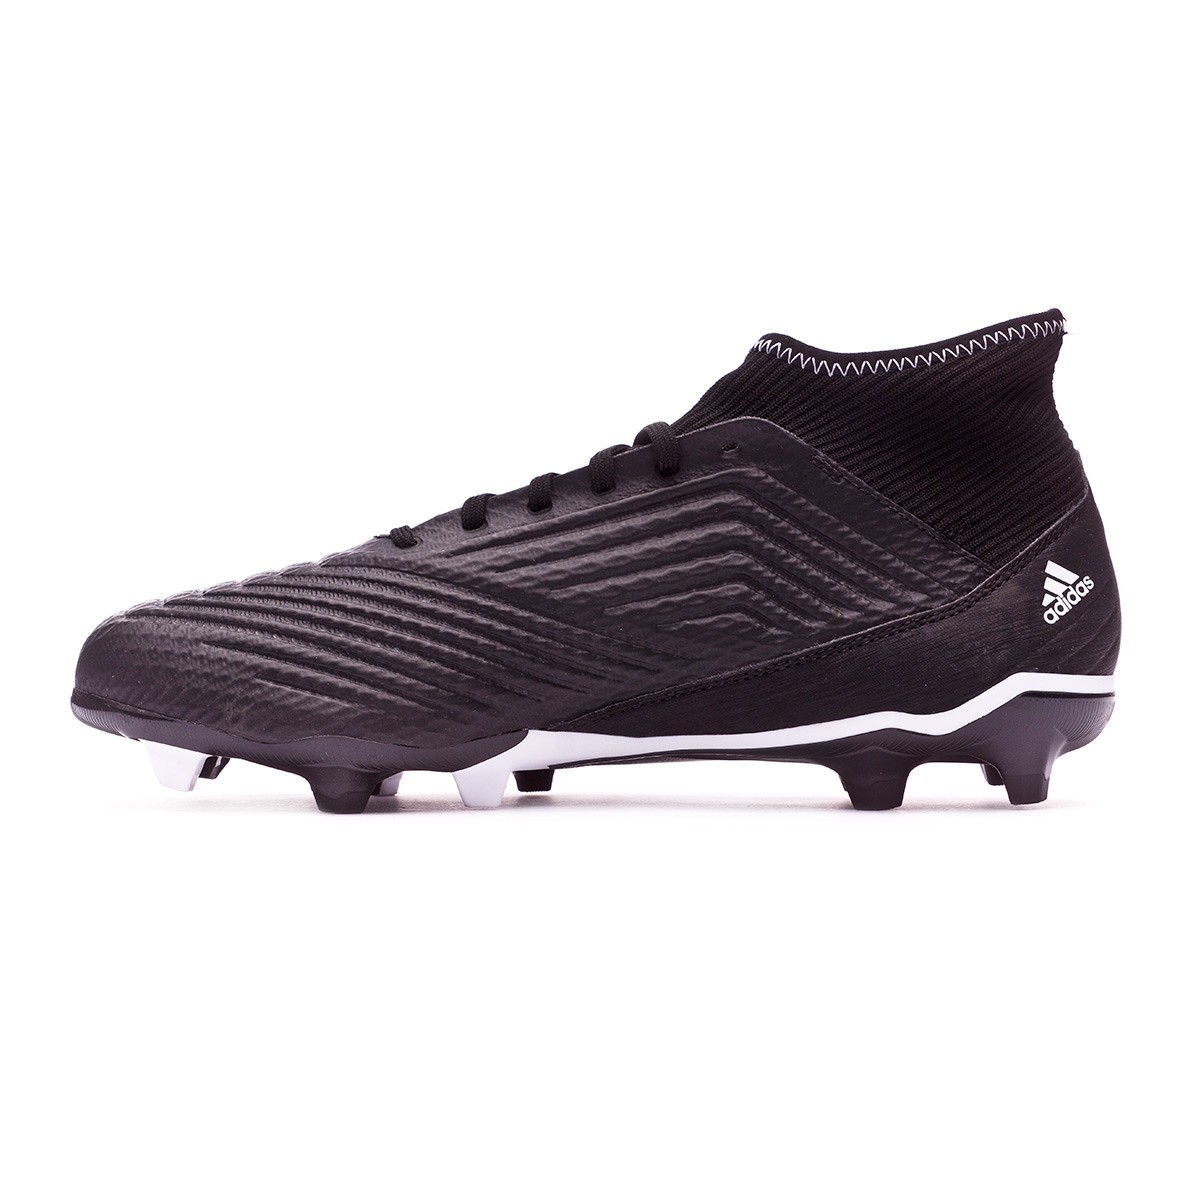 Football Boots Adidas Predator 18 3 Fg Core Black White Football